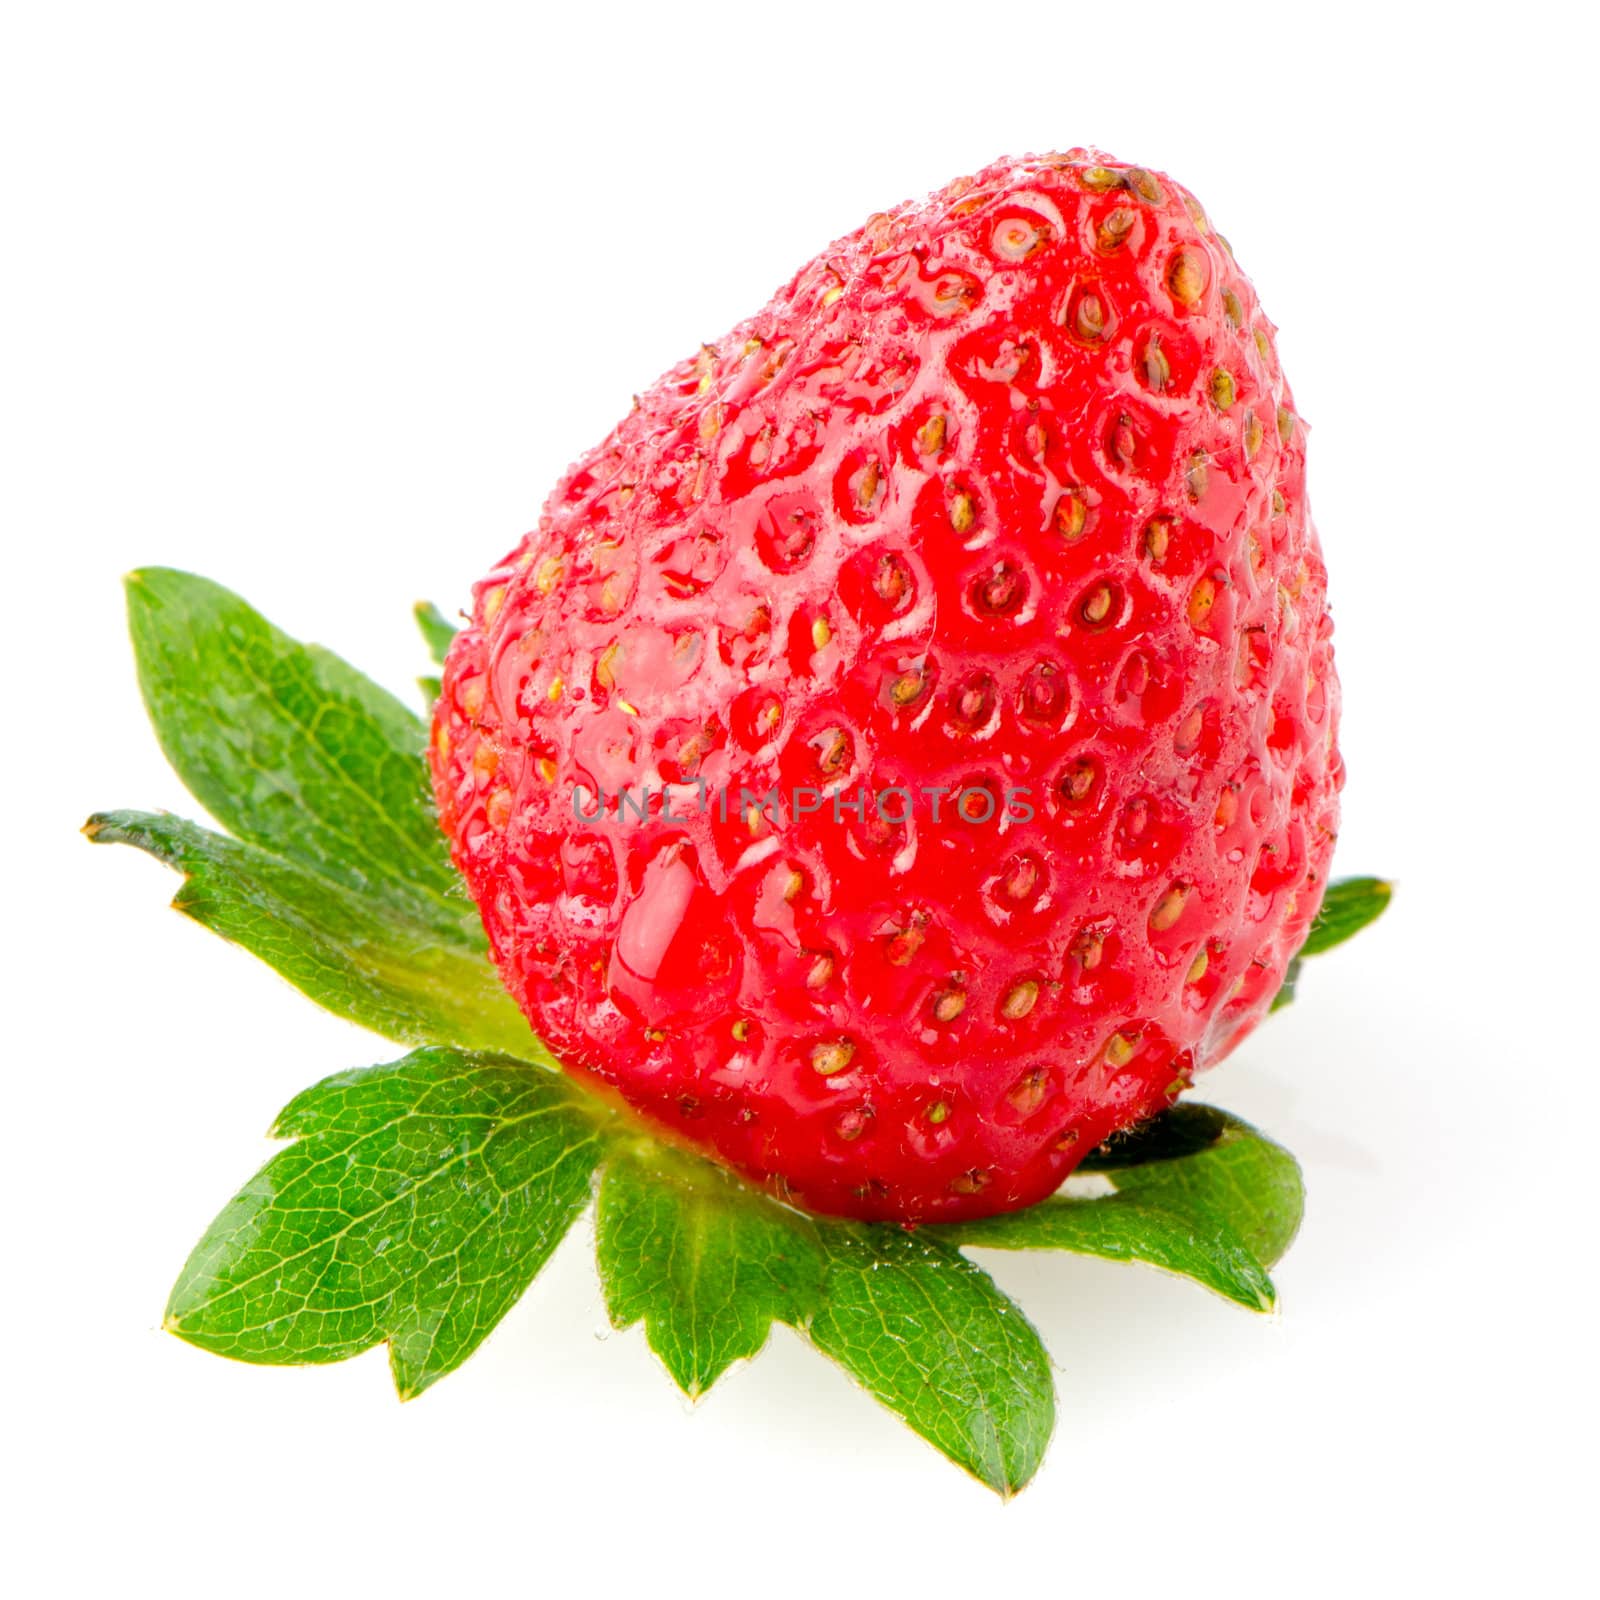 Fresh strawberry isolated on a white reflective background.